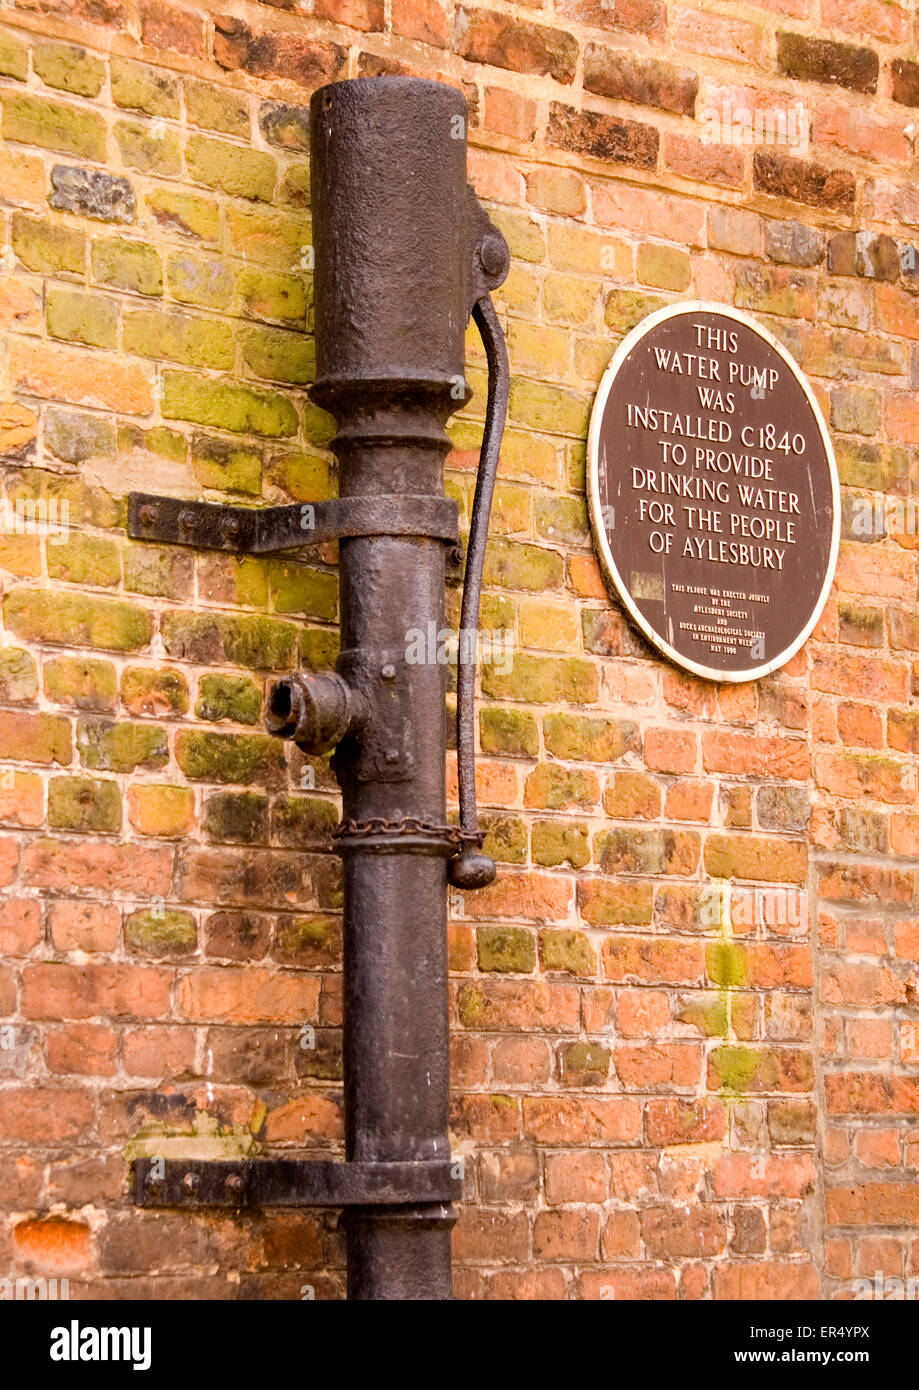 Bucks - Aylesbury town - social history - drinking water pump - set up in 1840 - ironwork - information plaque Stock Photo